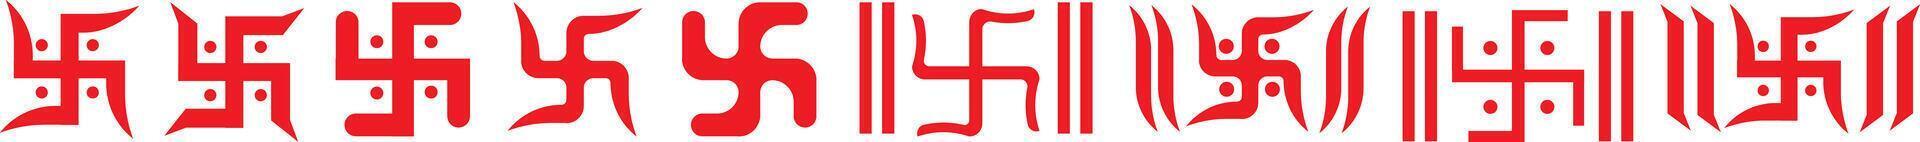 hindou religion important symbole svastika vecteur